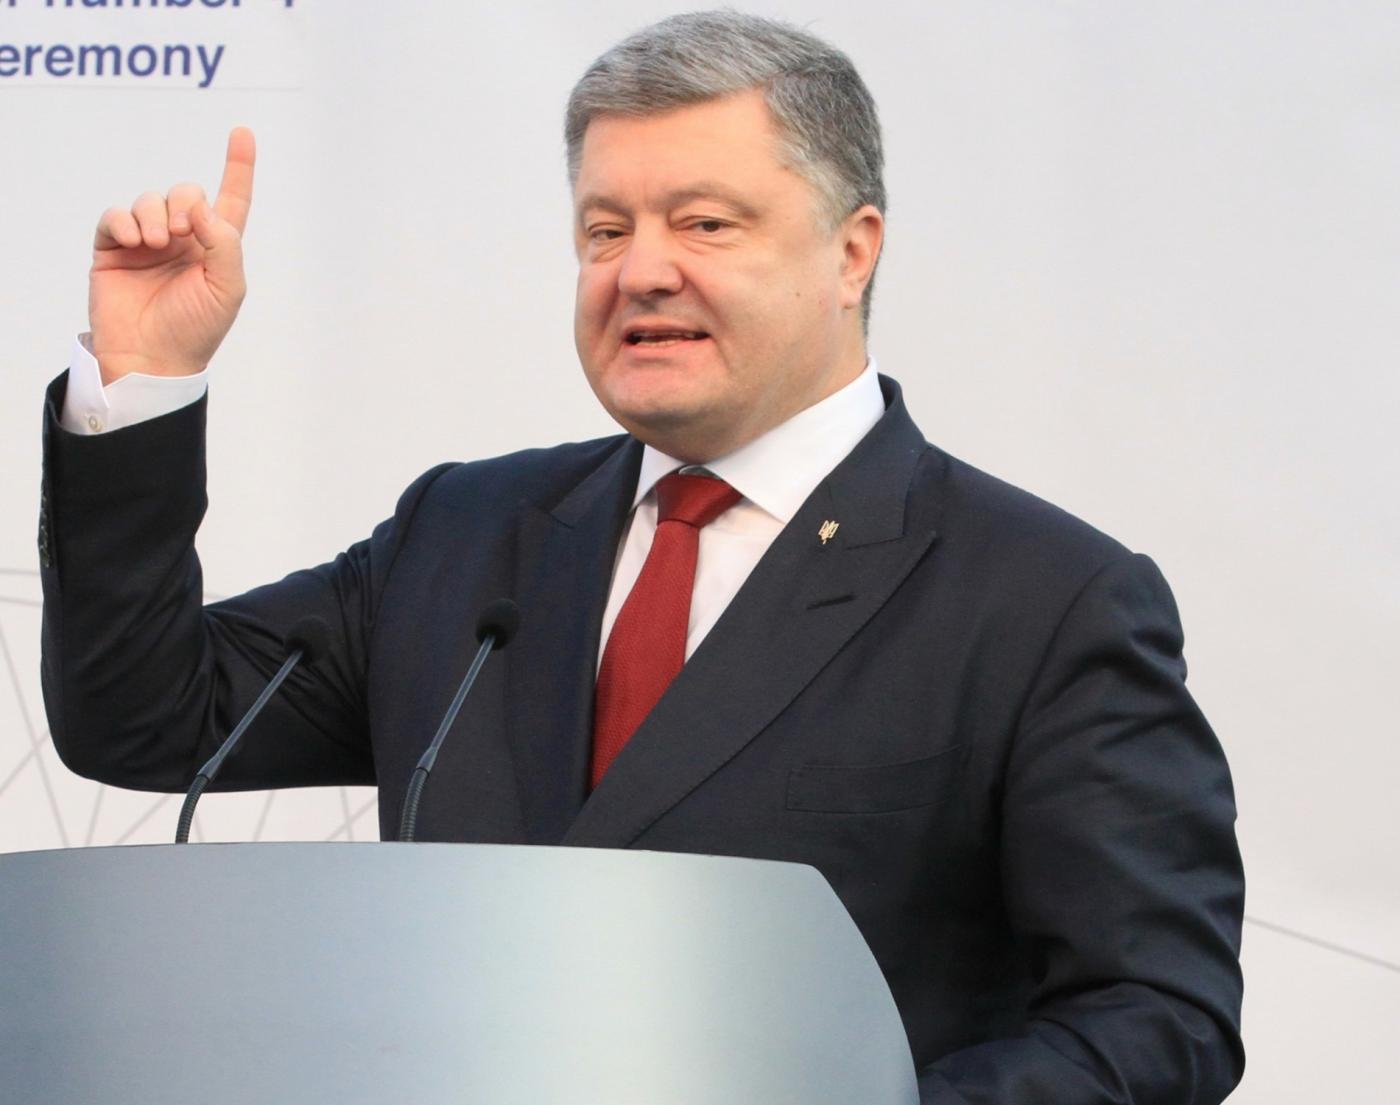 President of Ukraine Petro Poroshenko. (File Photo: IANS) by .